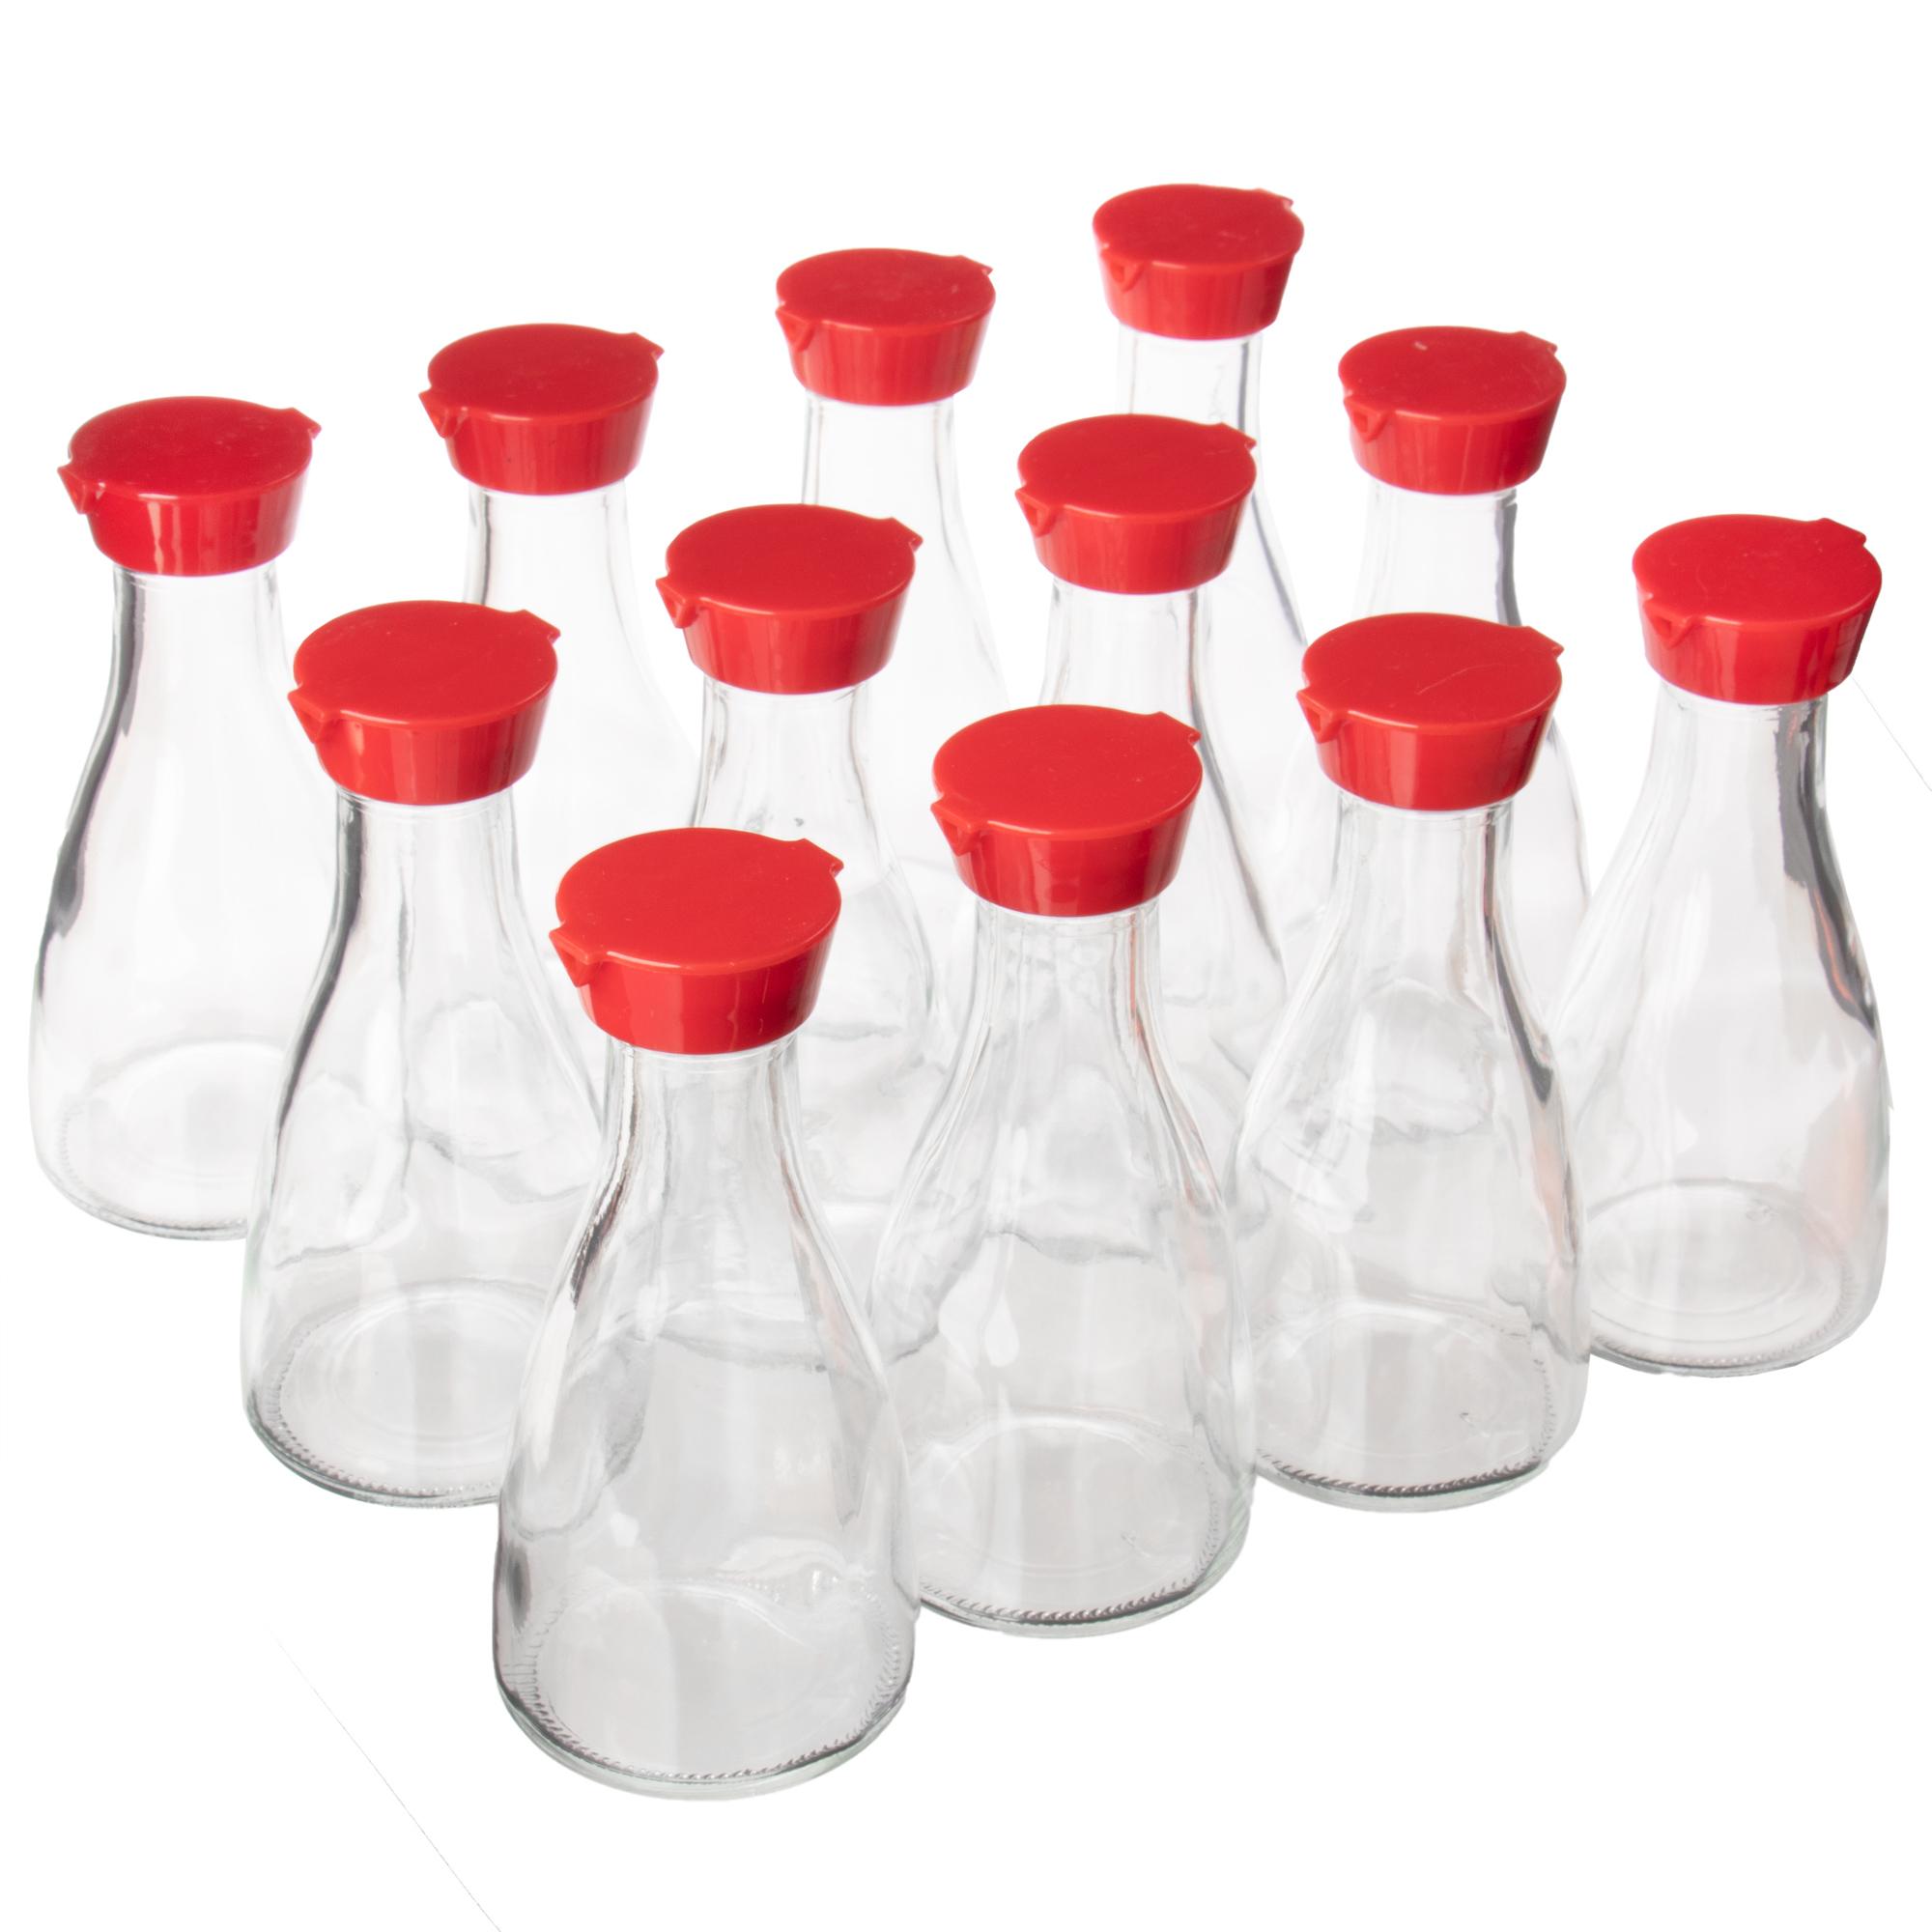 148mL Soy Sauce Bottles, 12-pack (Red)